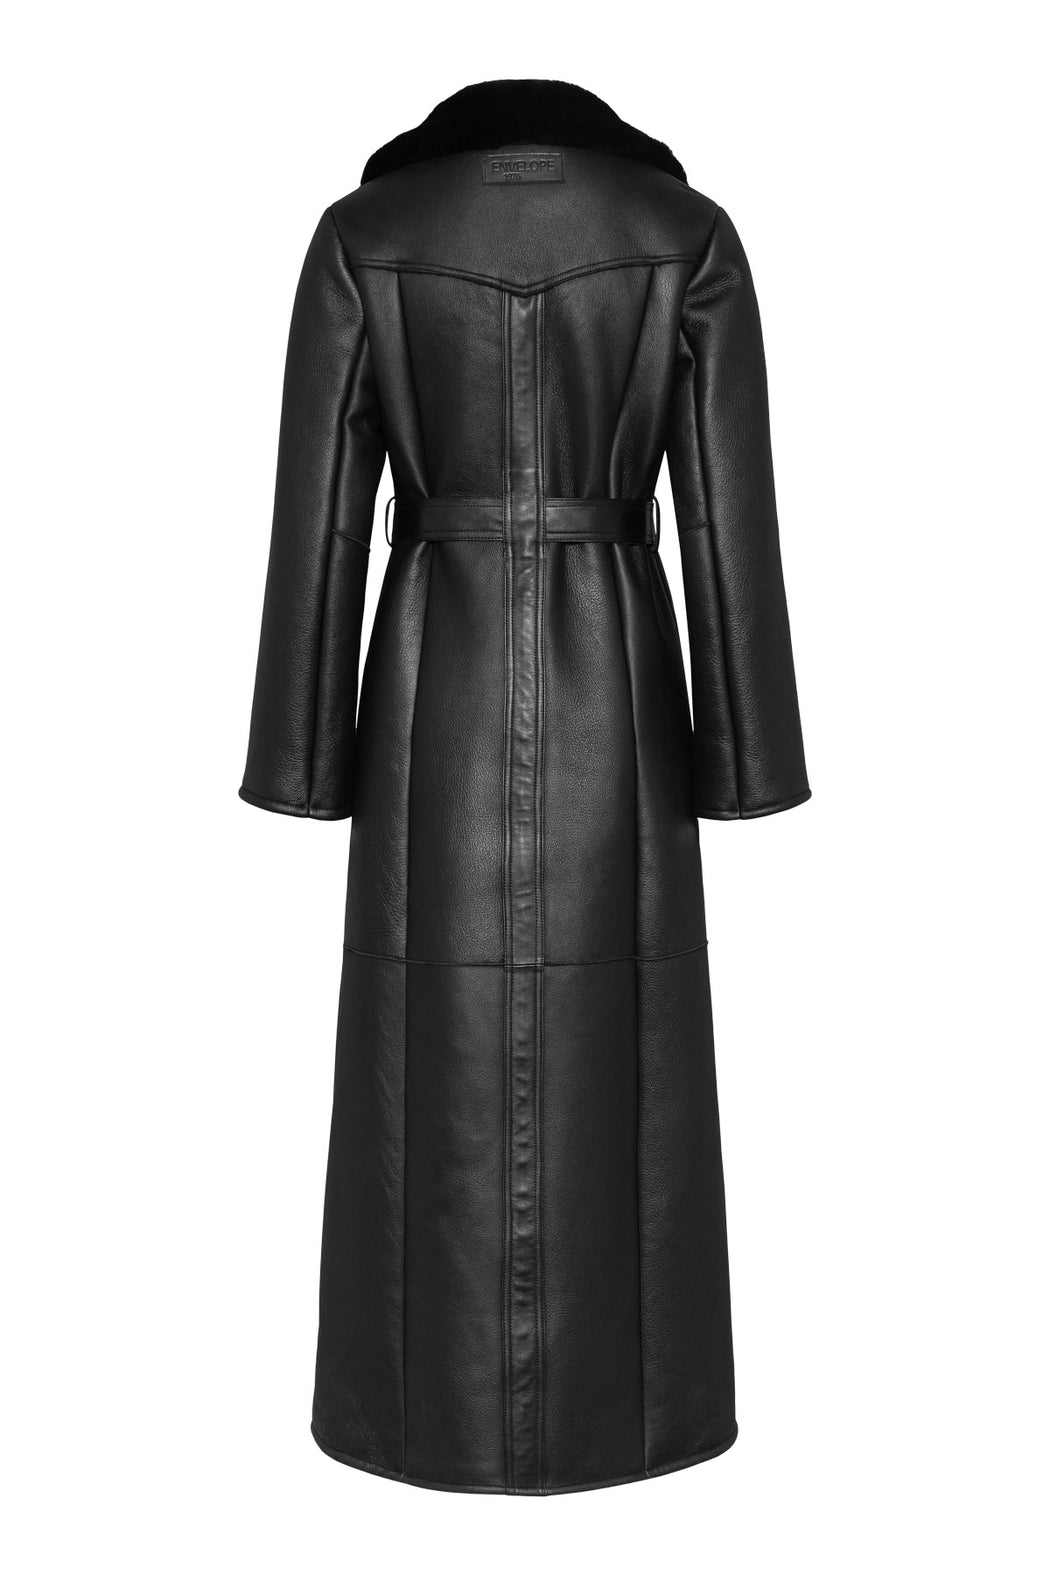 Envelope1976 Woodstock coat II, Black Coat Black